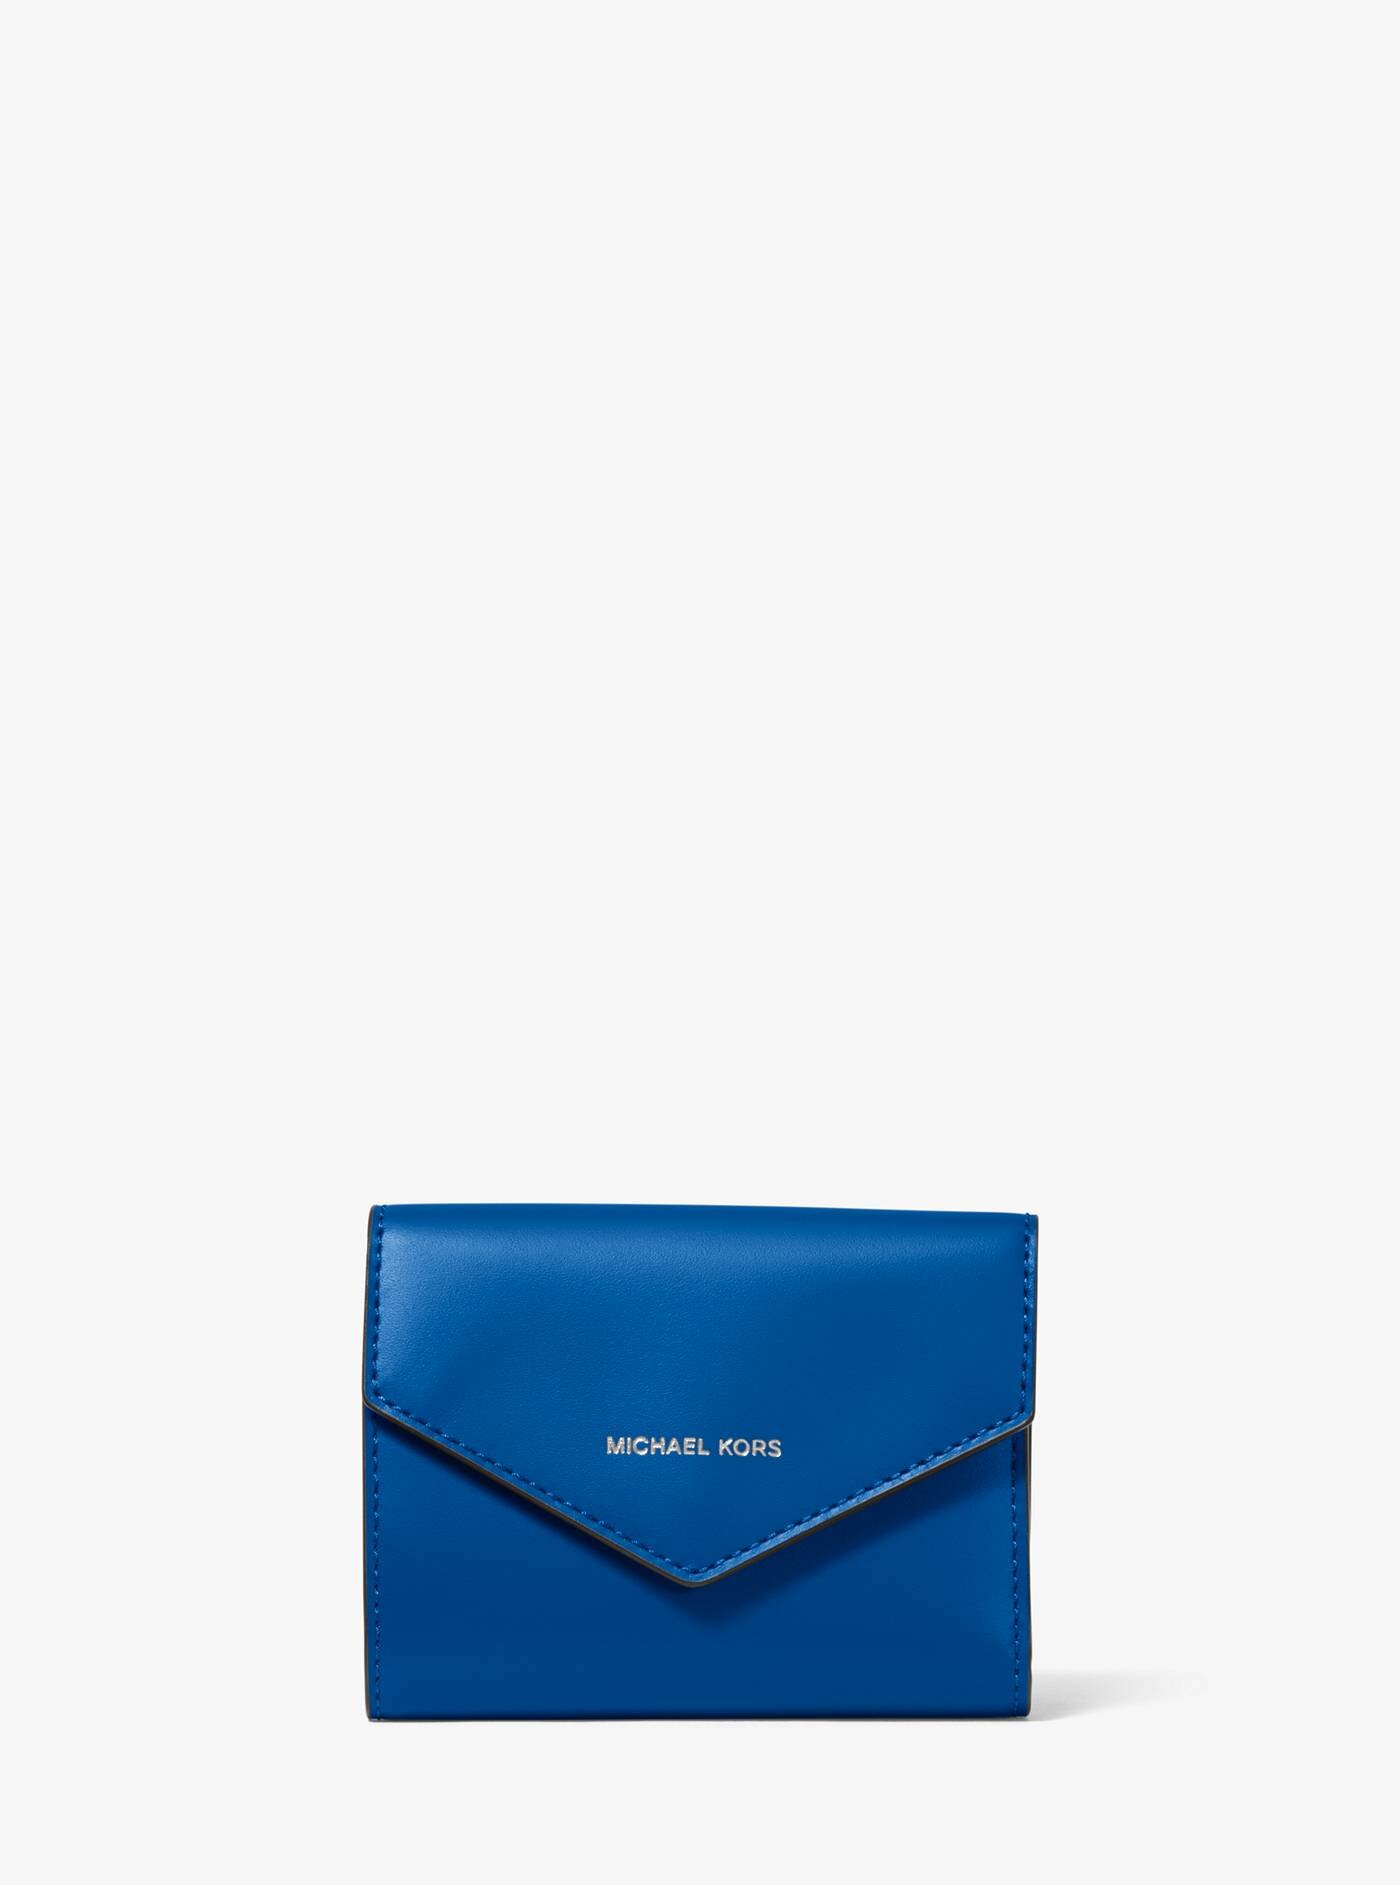 michael kors small blue wallet